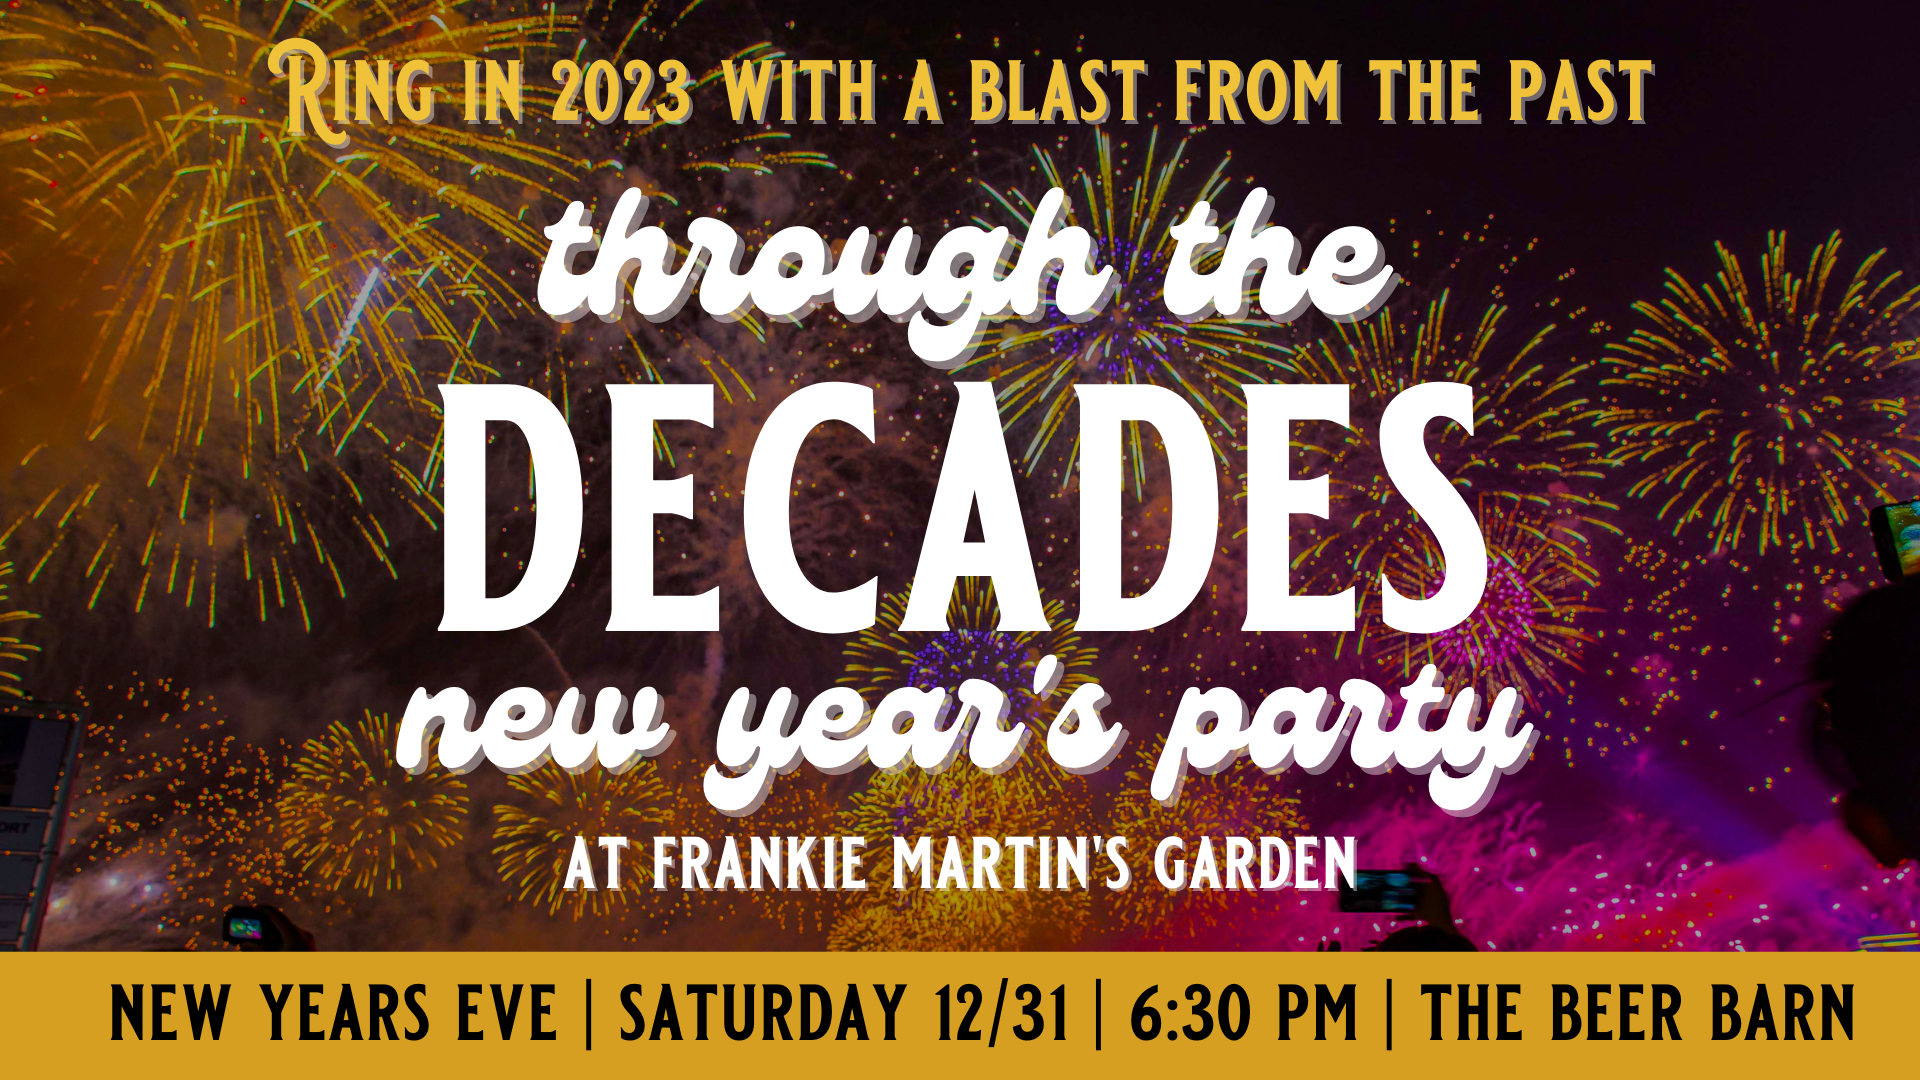 Frankie Martin's Garden New Year's Eve party - Through the Decades